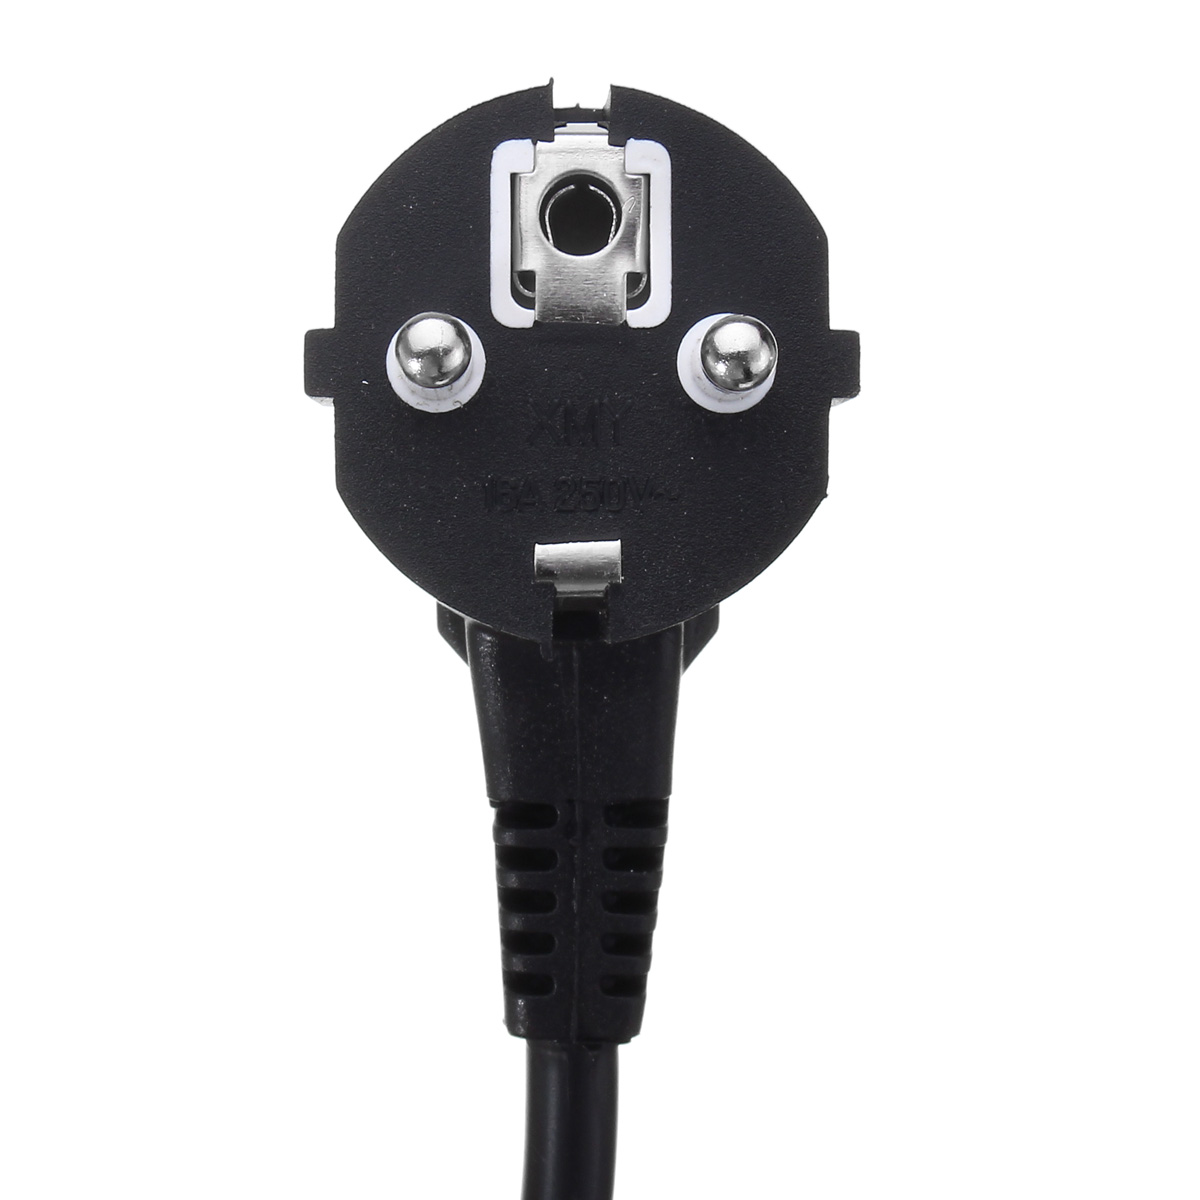 E27-Digital-Reptile-Thermostat-Heating-Control-with-220V-75mm-Dia-Ceramic-Heat-Emitter-Lamp-Bulbs-EU-1263073-9